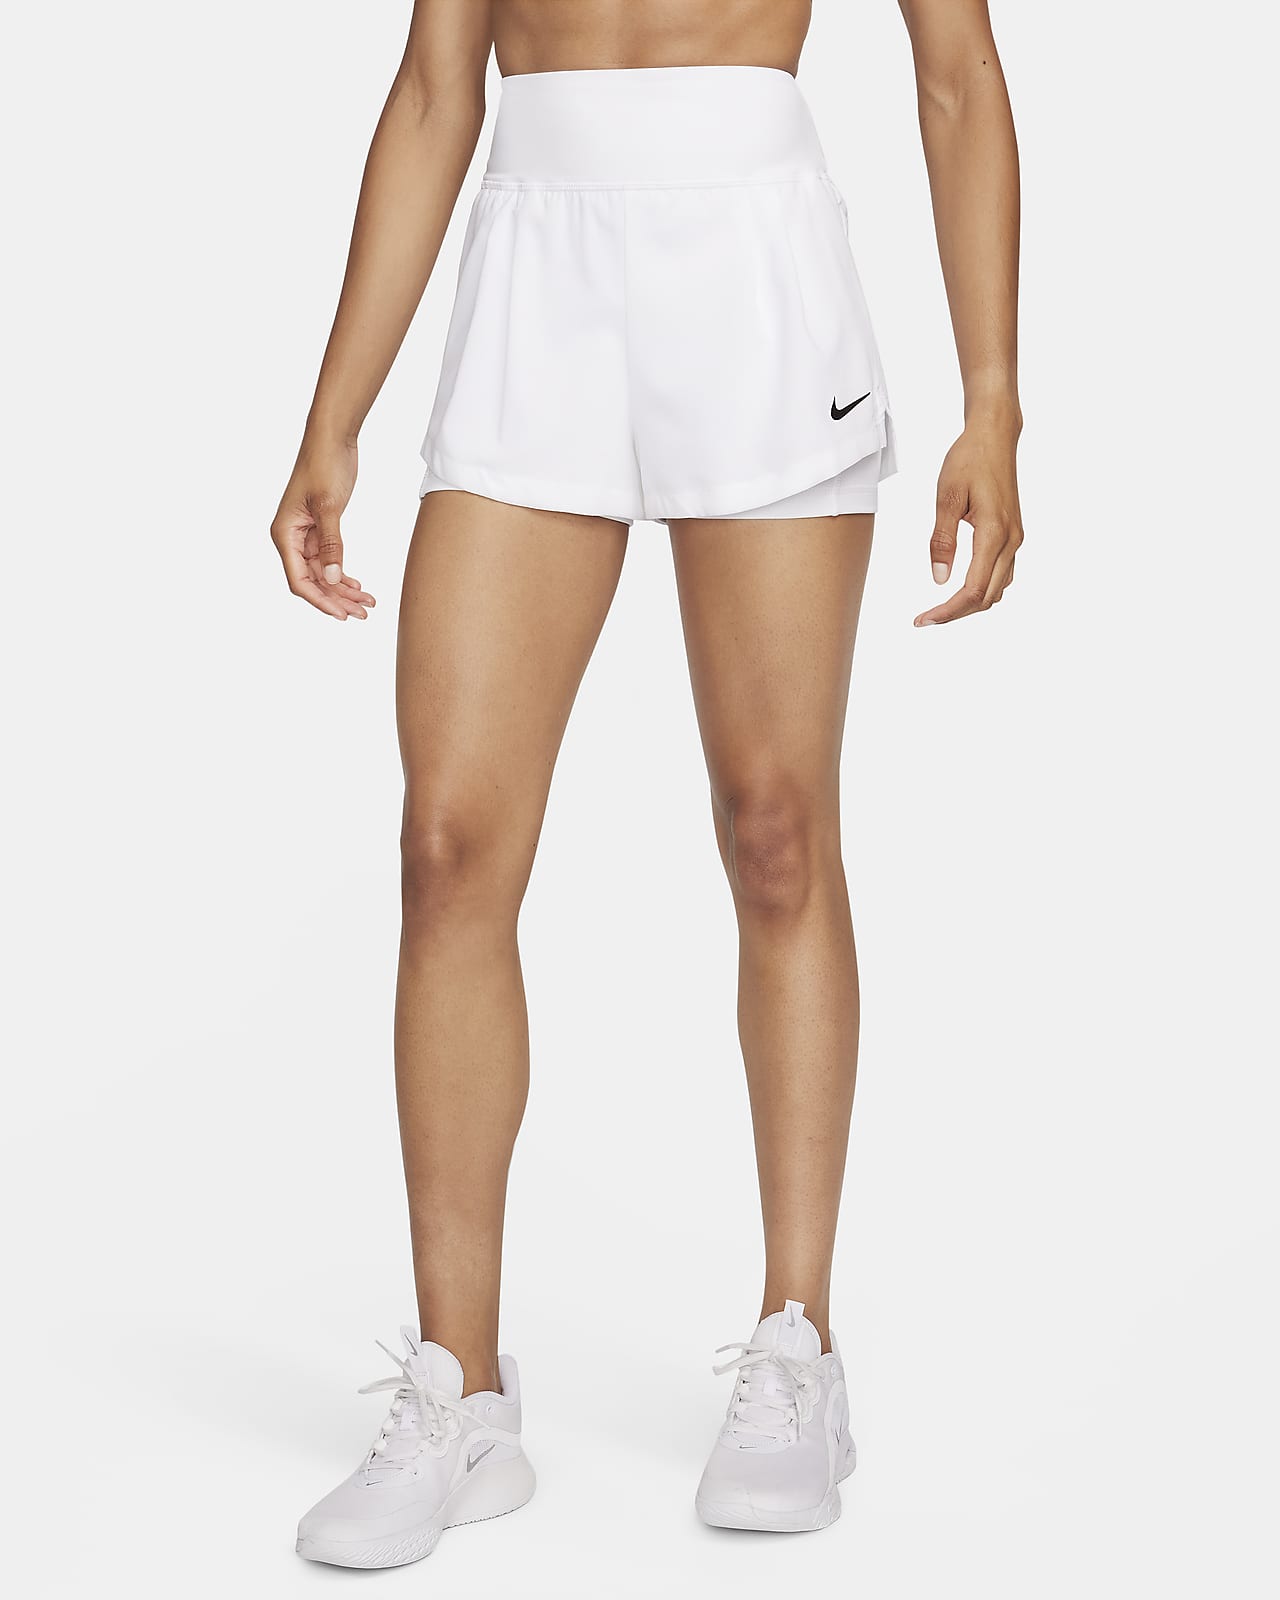 Nike, Shorts, Nike Yoga Lux Womens Shorts